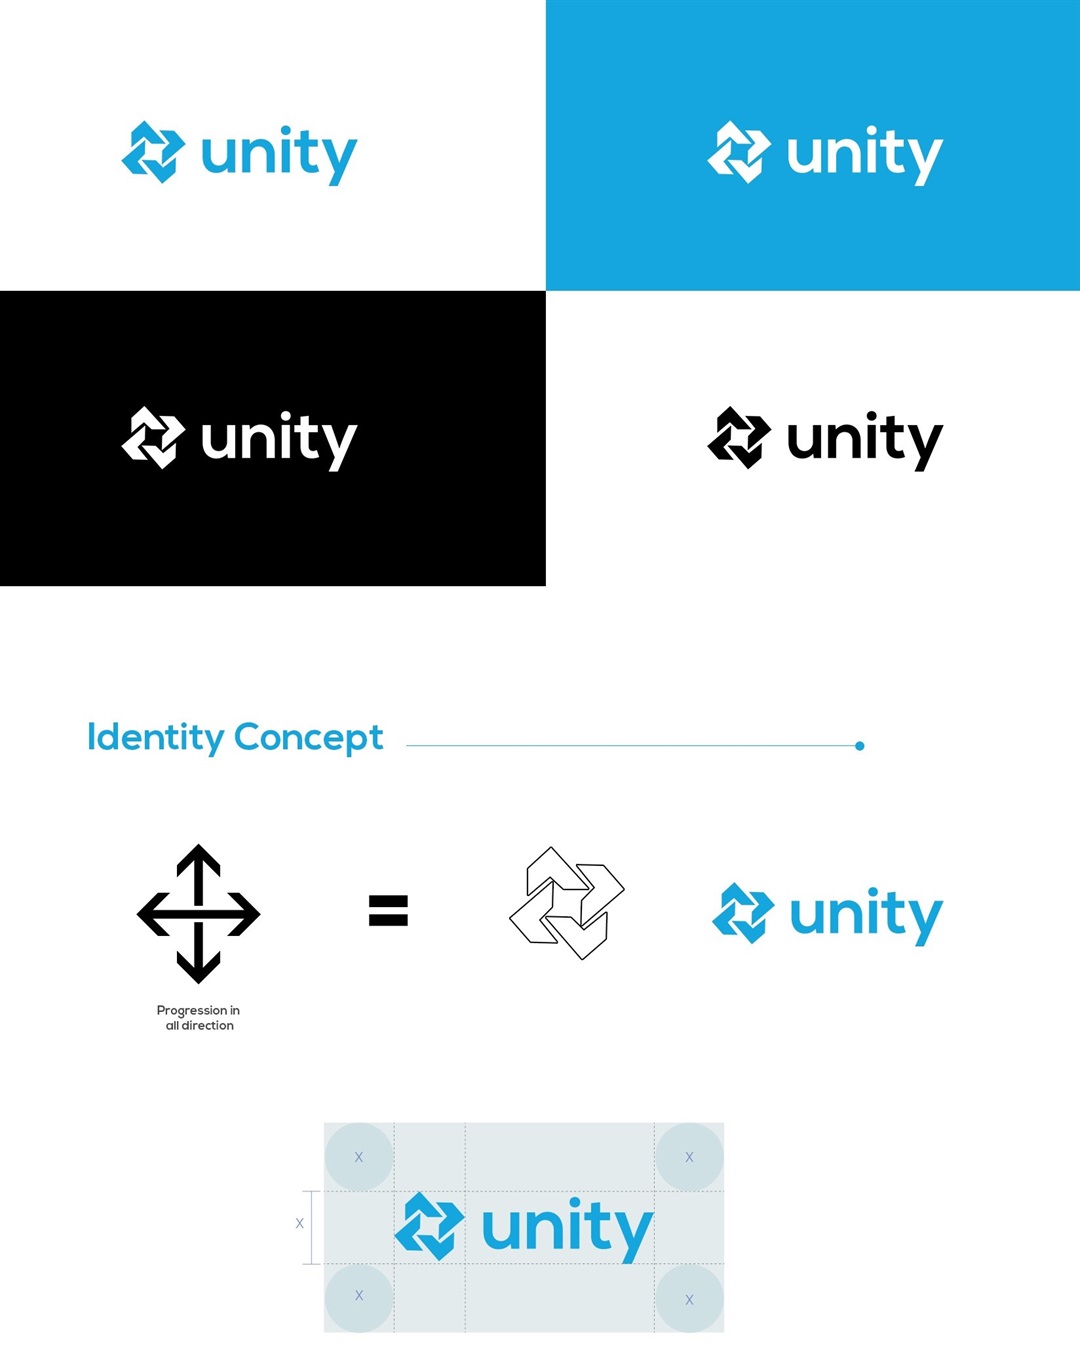 Unity- Branding,Logo,Web Design & Development